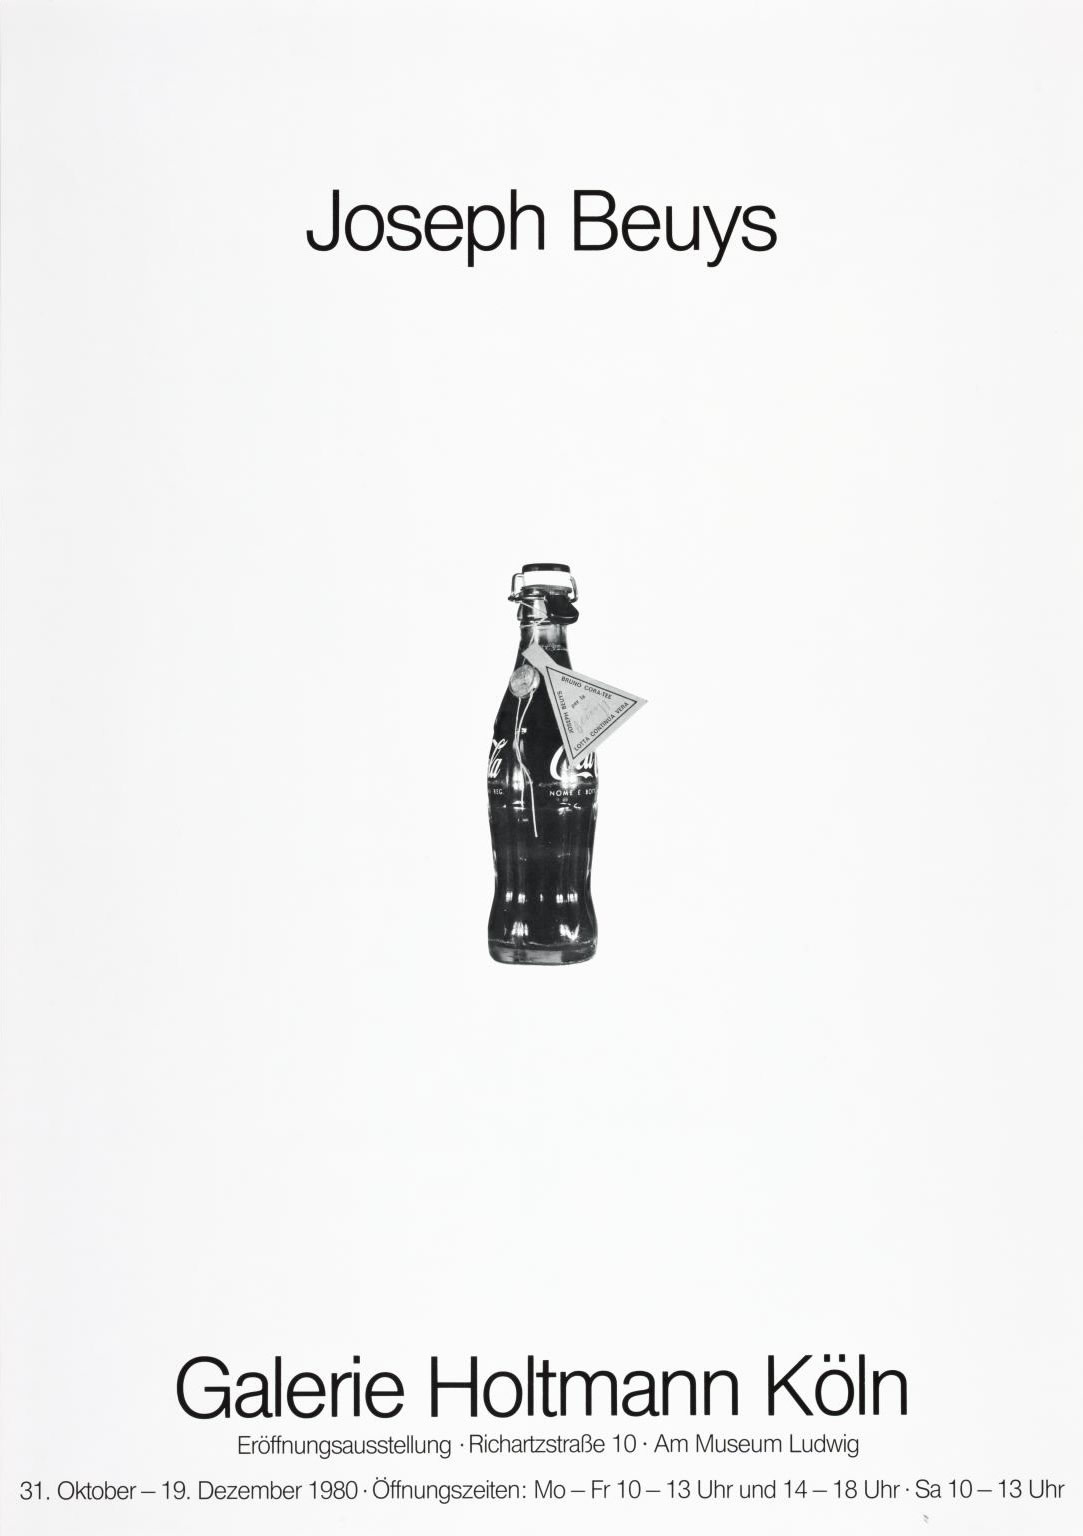 Joseph Beuys: Galeria Holtmann Koln. 1980